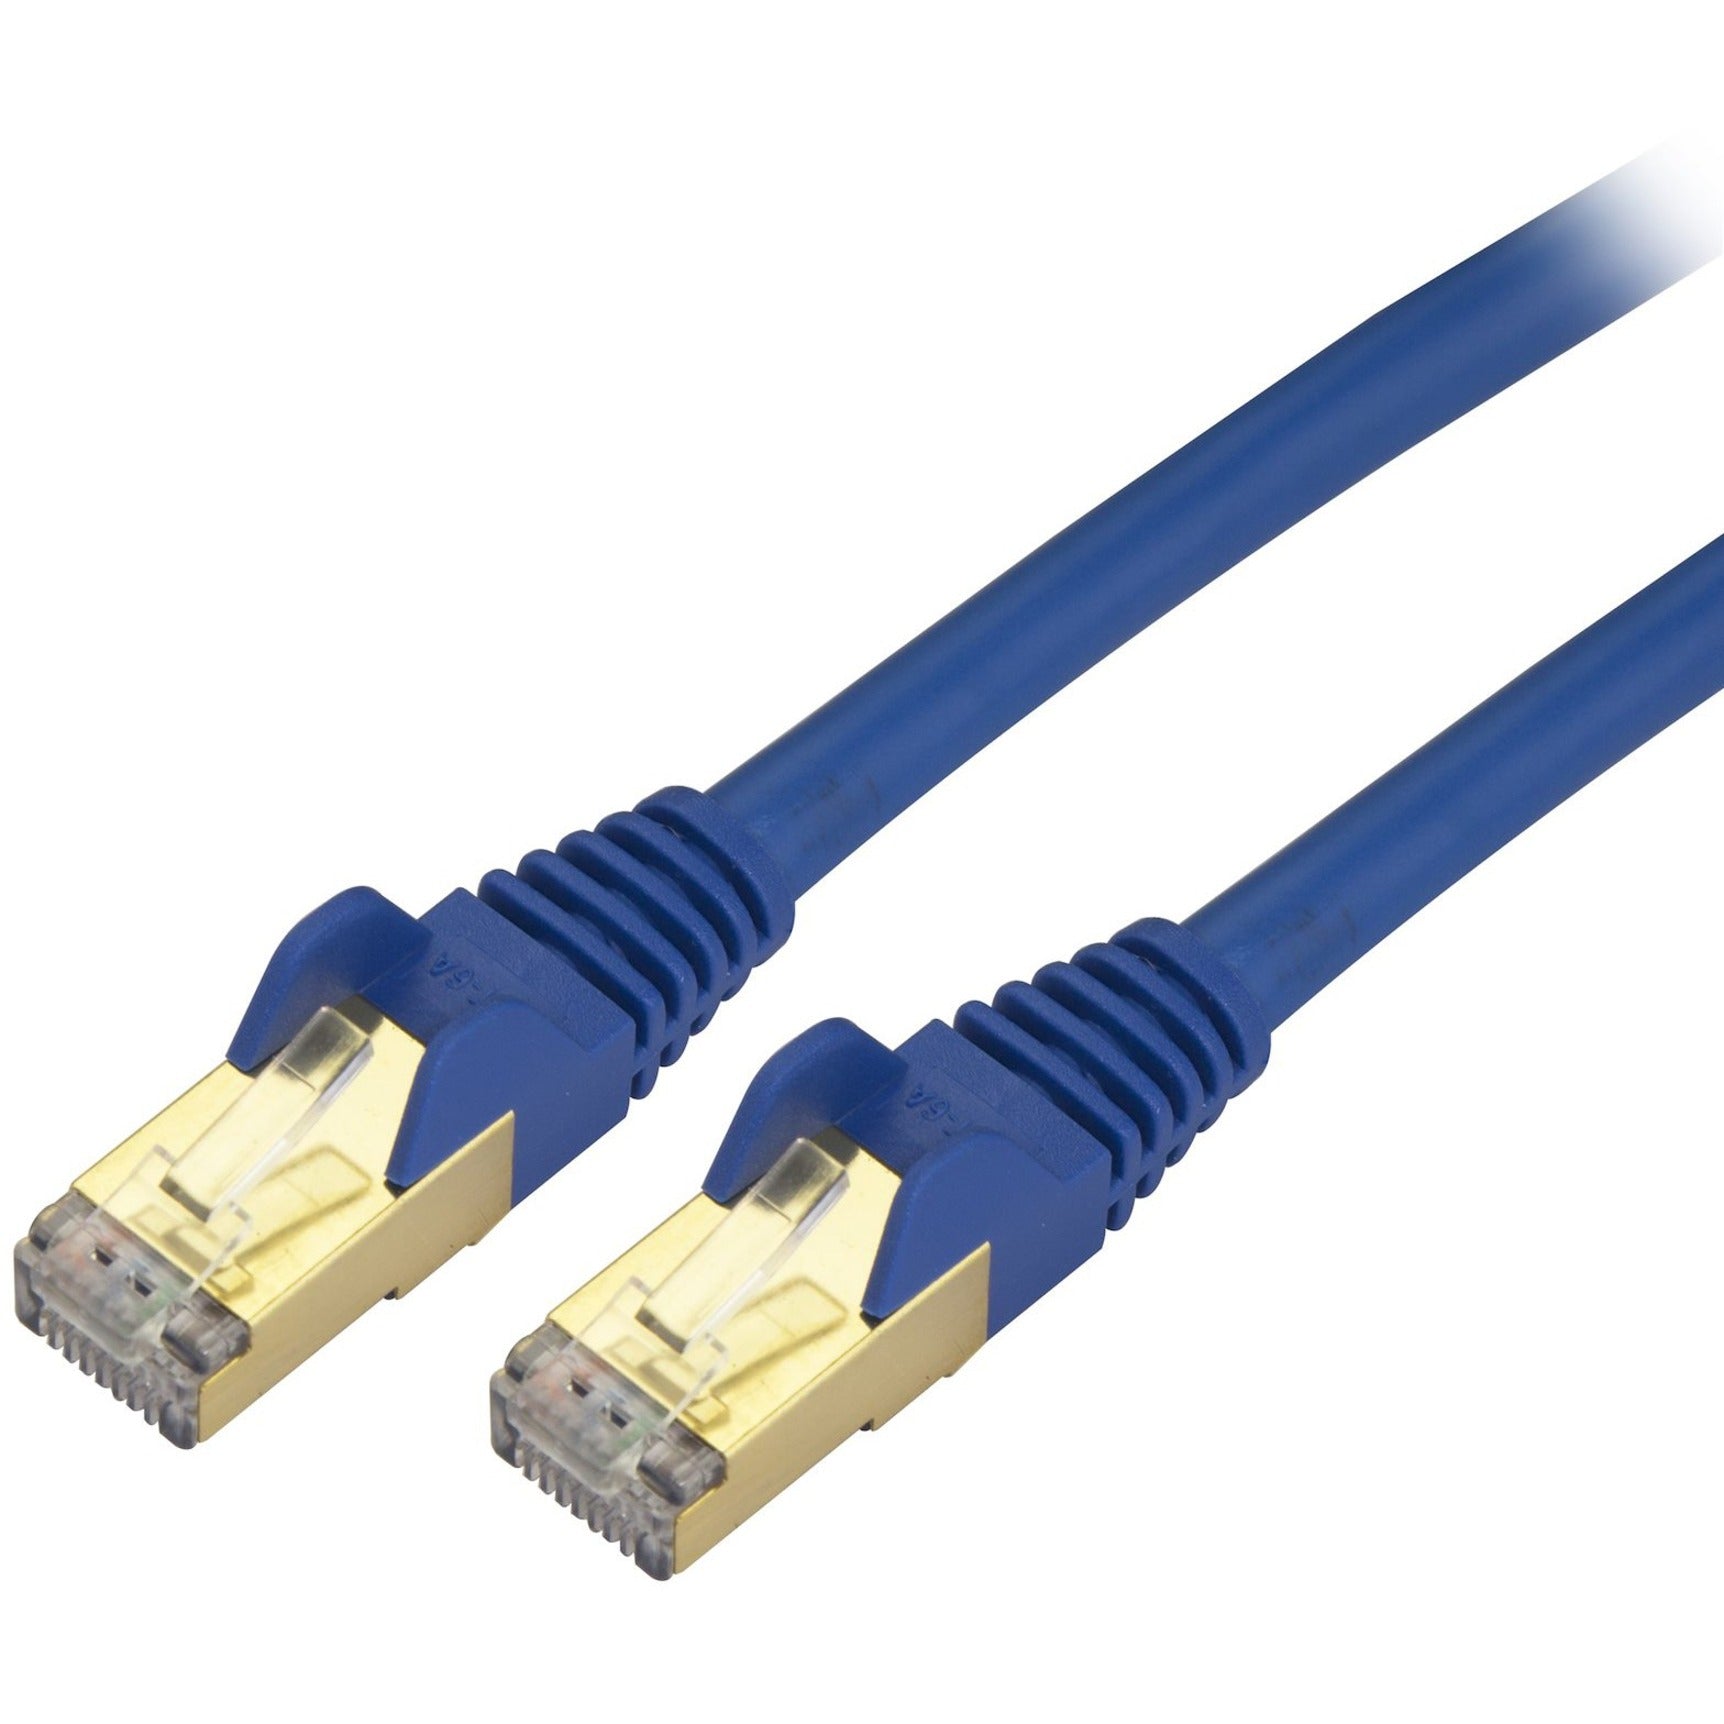 StarTech.com C6ASPAT2BL Cat6a Ethernet Patch Cable - Shielded (STP) - 2 ft., Blue, Snagless RJ45 Ethernet Cord